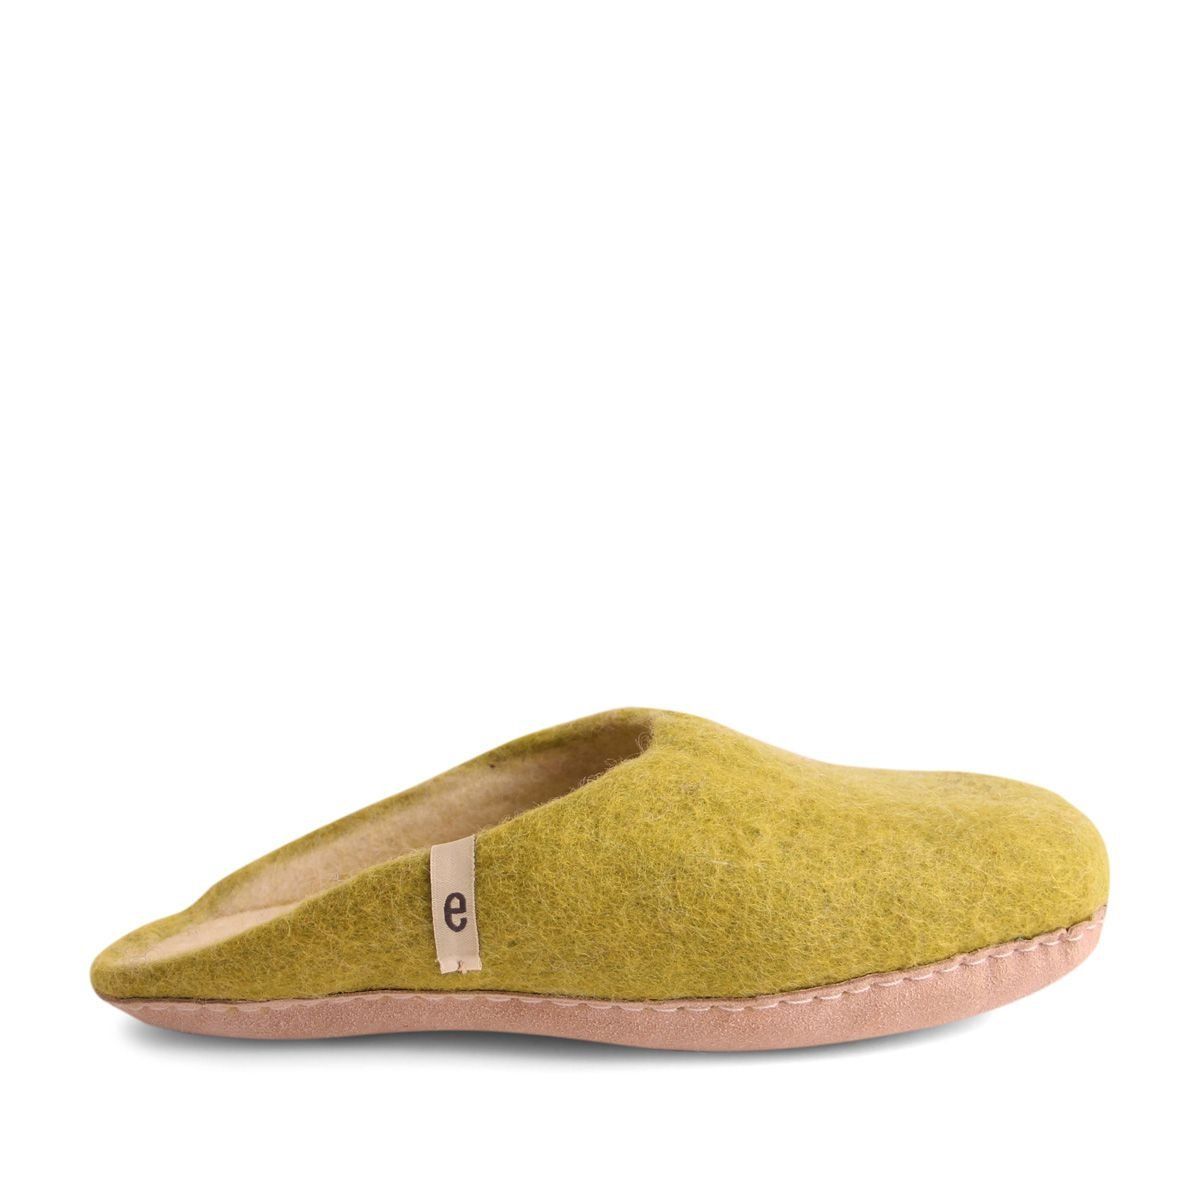 Egos Slip-on Indoor Shoe Simple in Lime Green